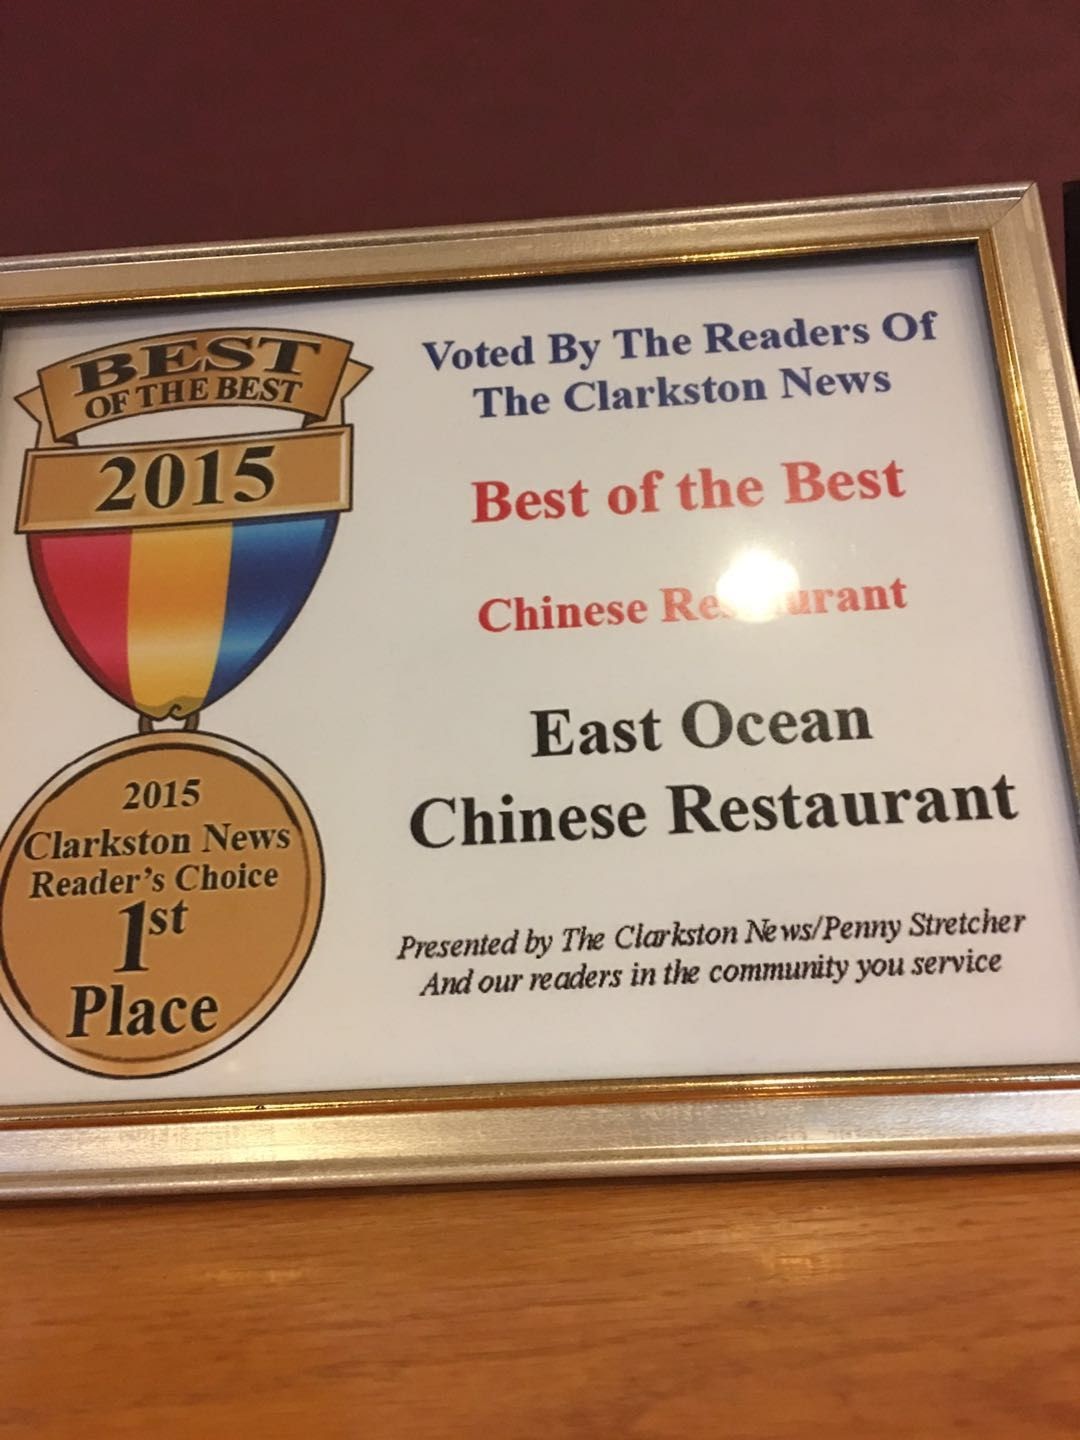 East Ocean Chinese Restaurant in Clarkston, MI